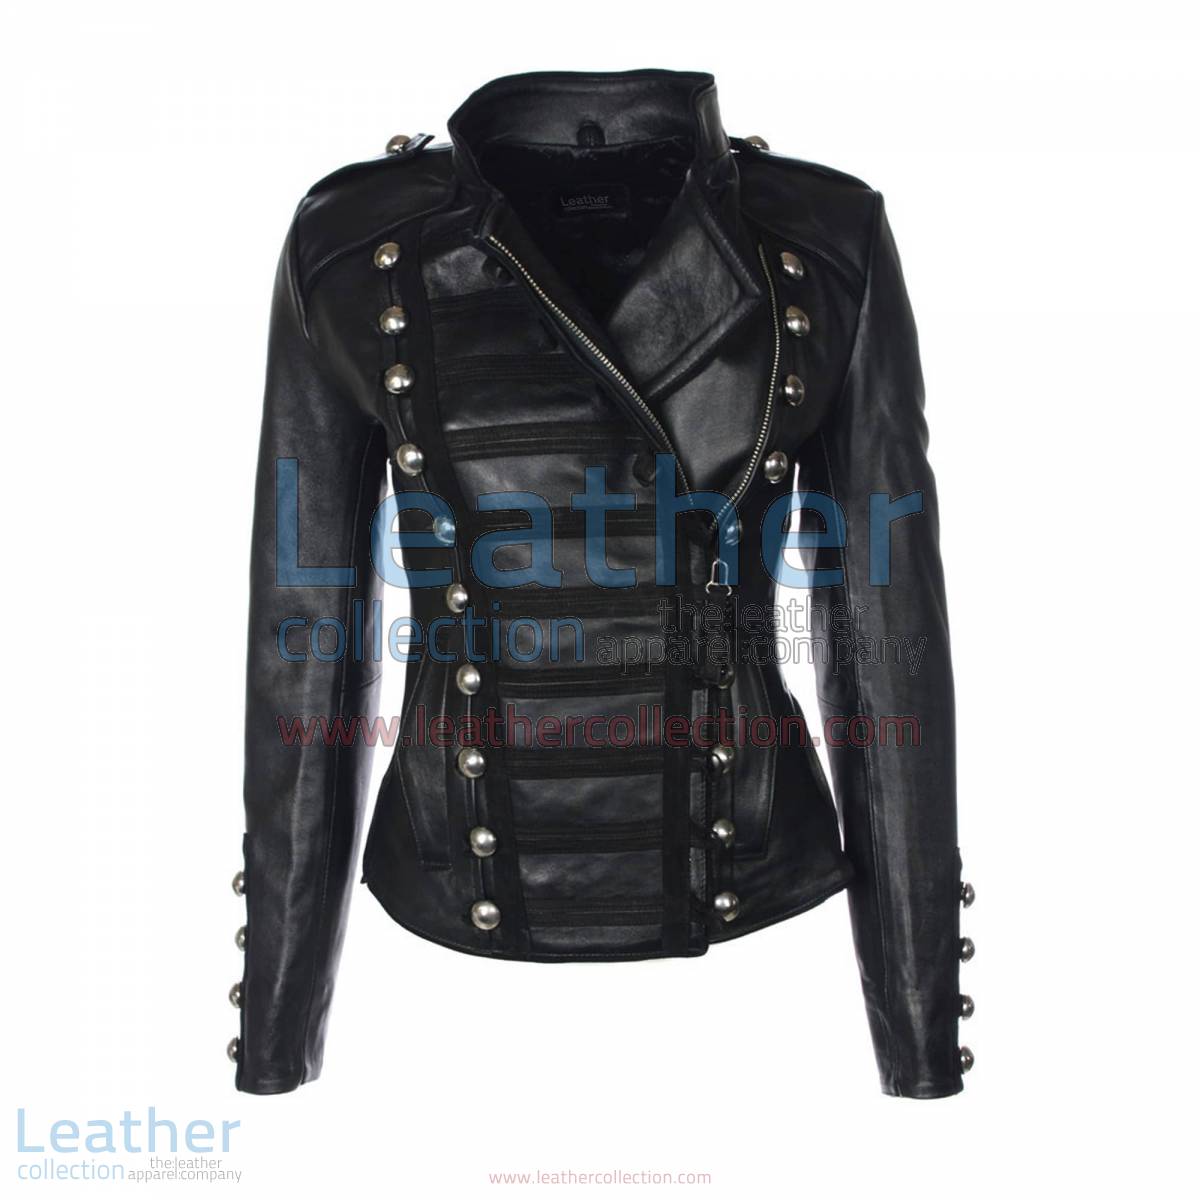 Princess Leather Jacket Black | leather jacket black,princess jacket